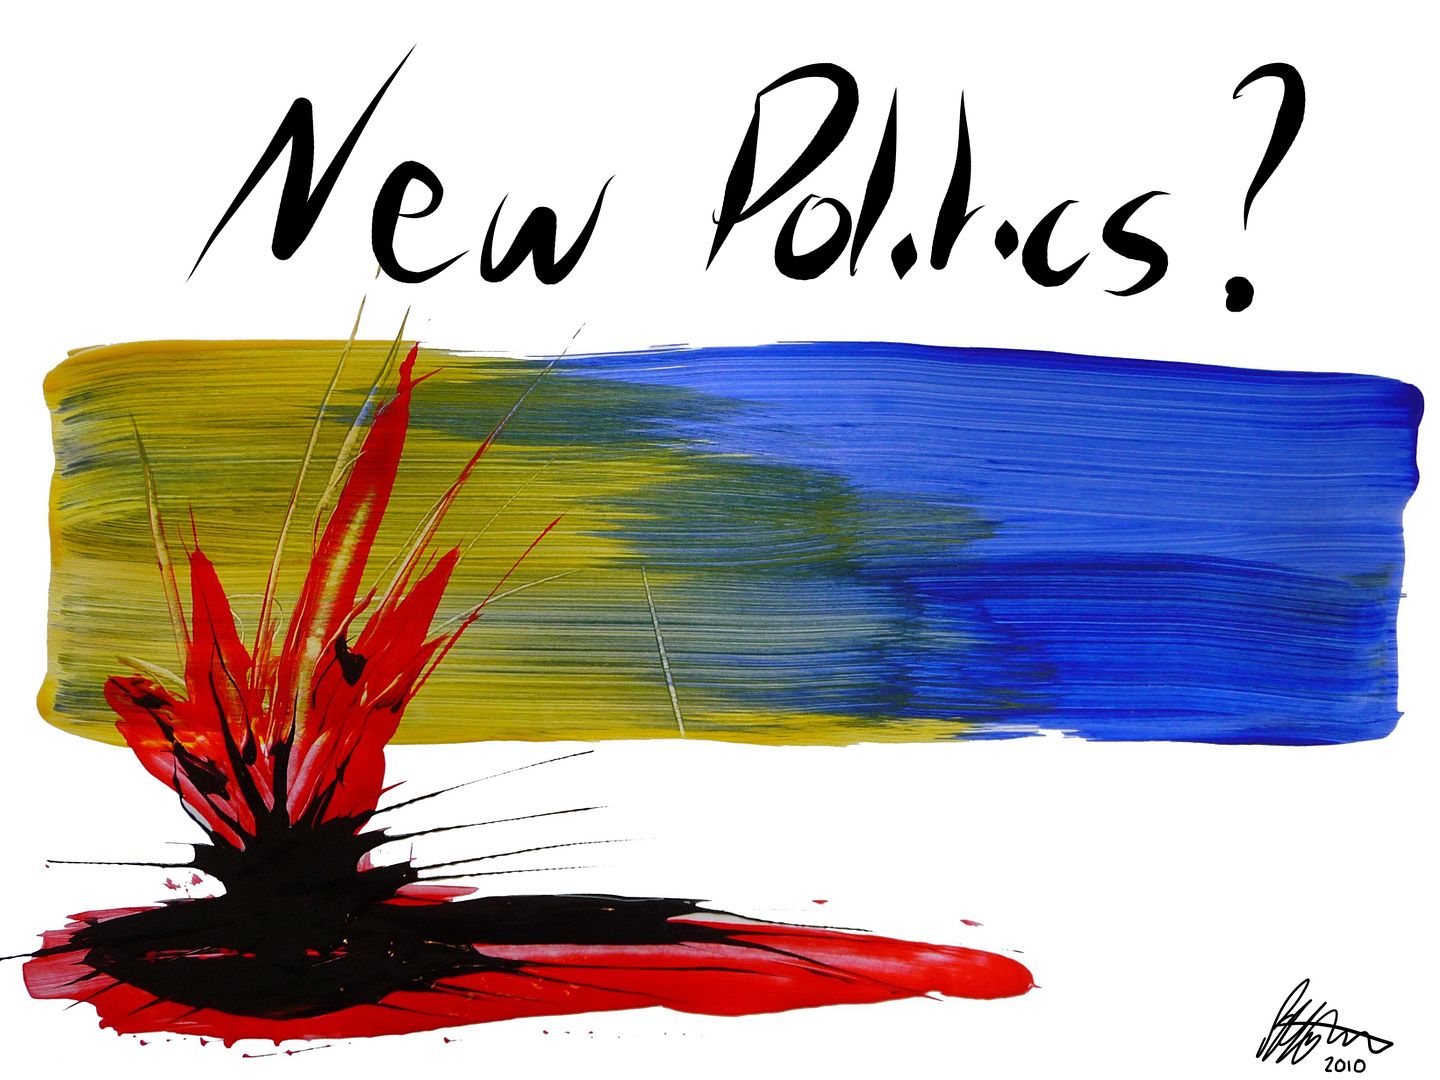 NewPolitics2.jpg New Politics? image by rosshetherington